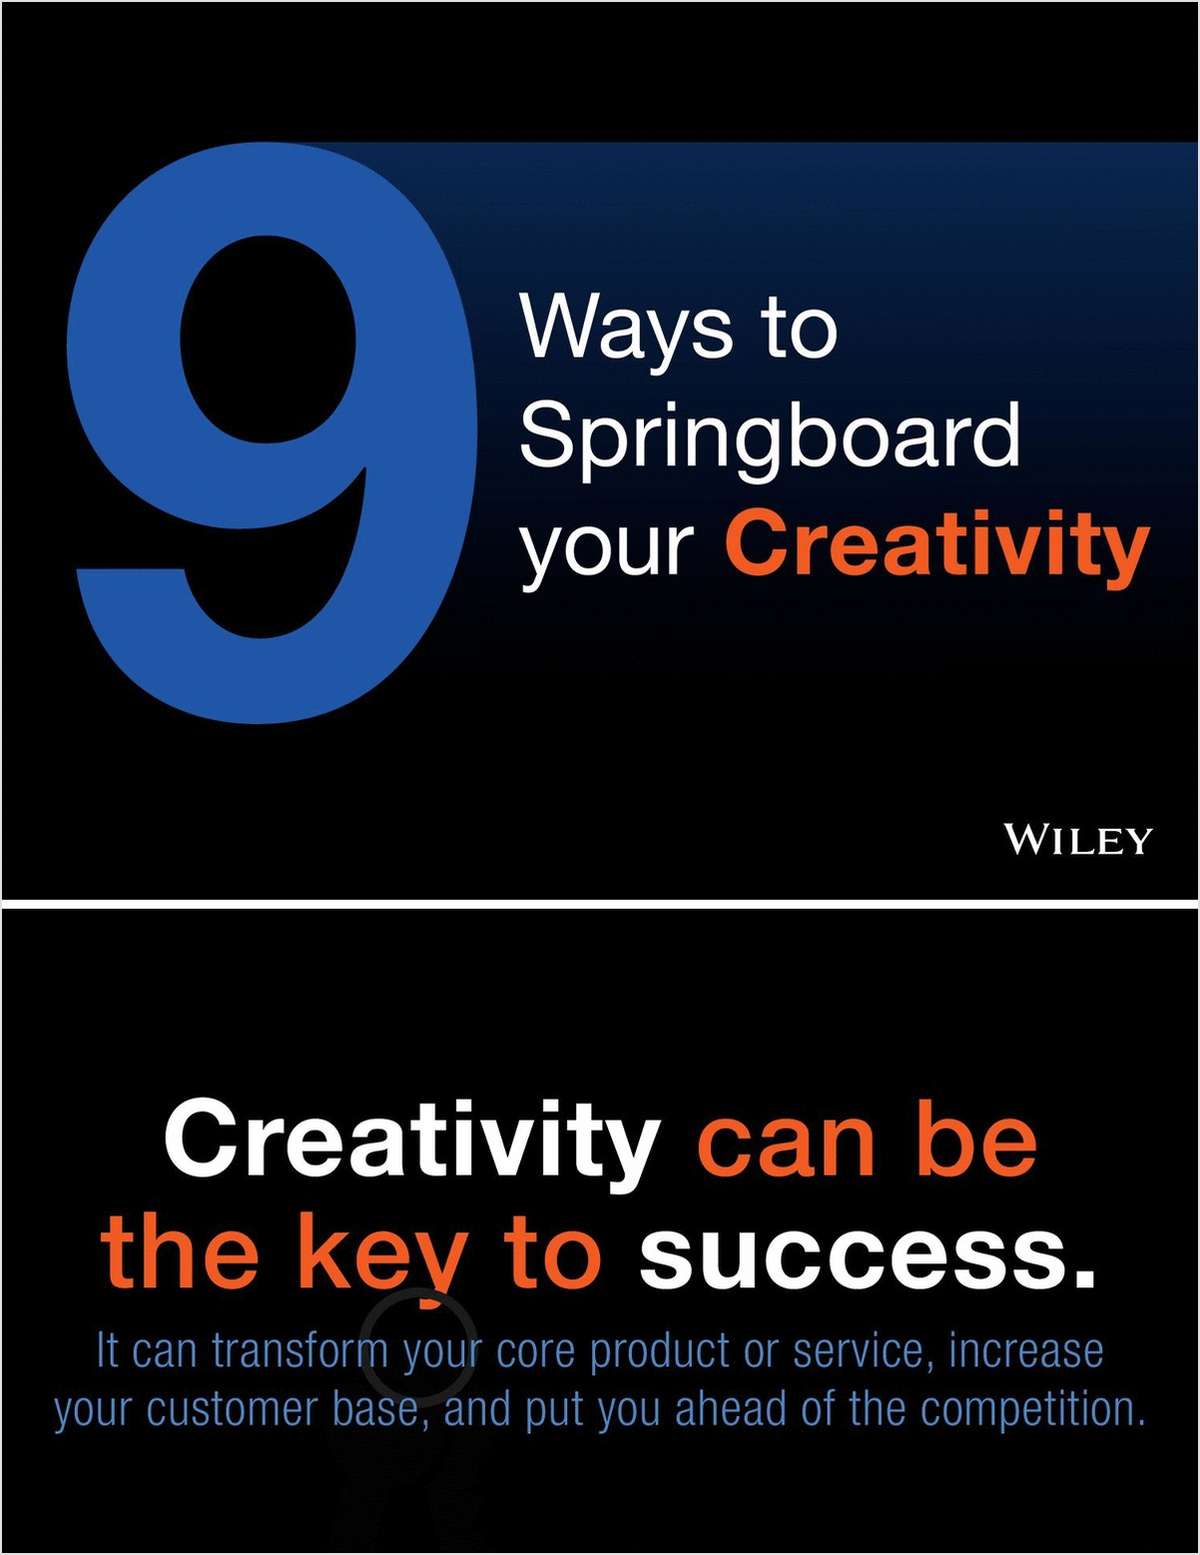 9 Ways to Springboard your Creativity